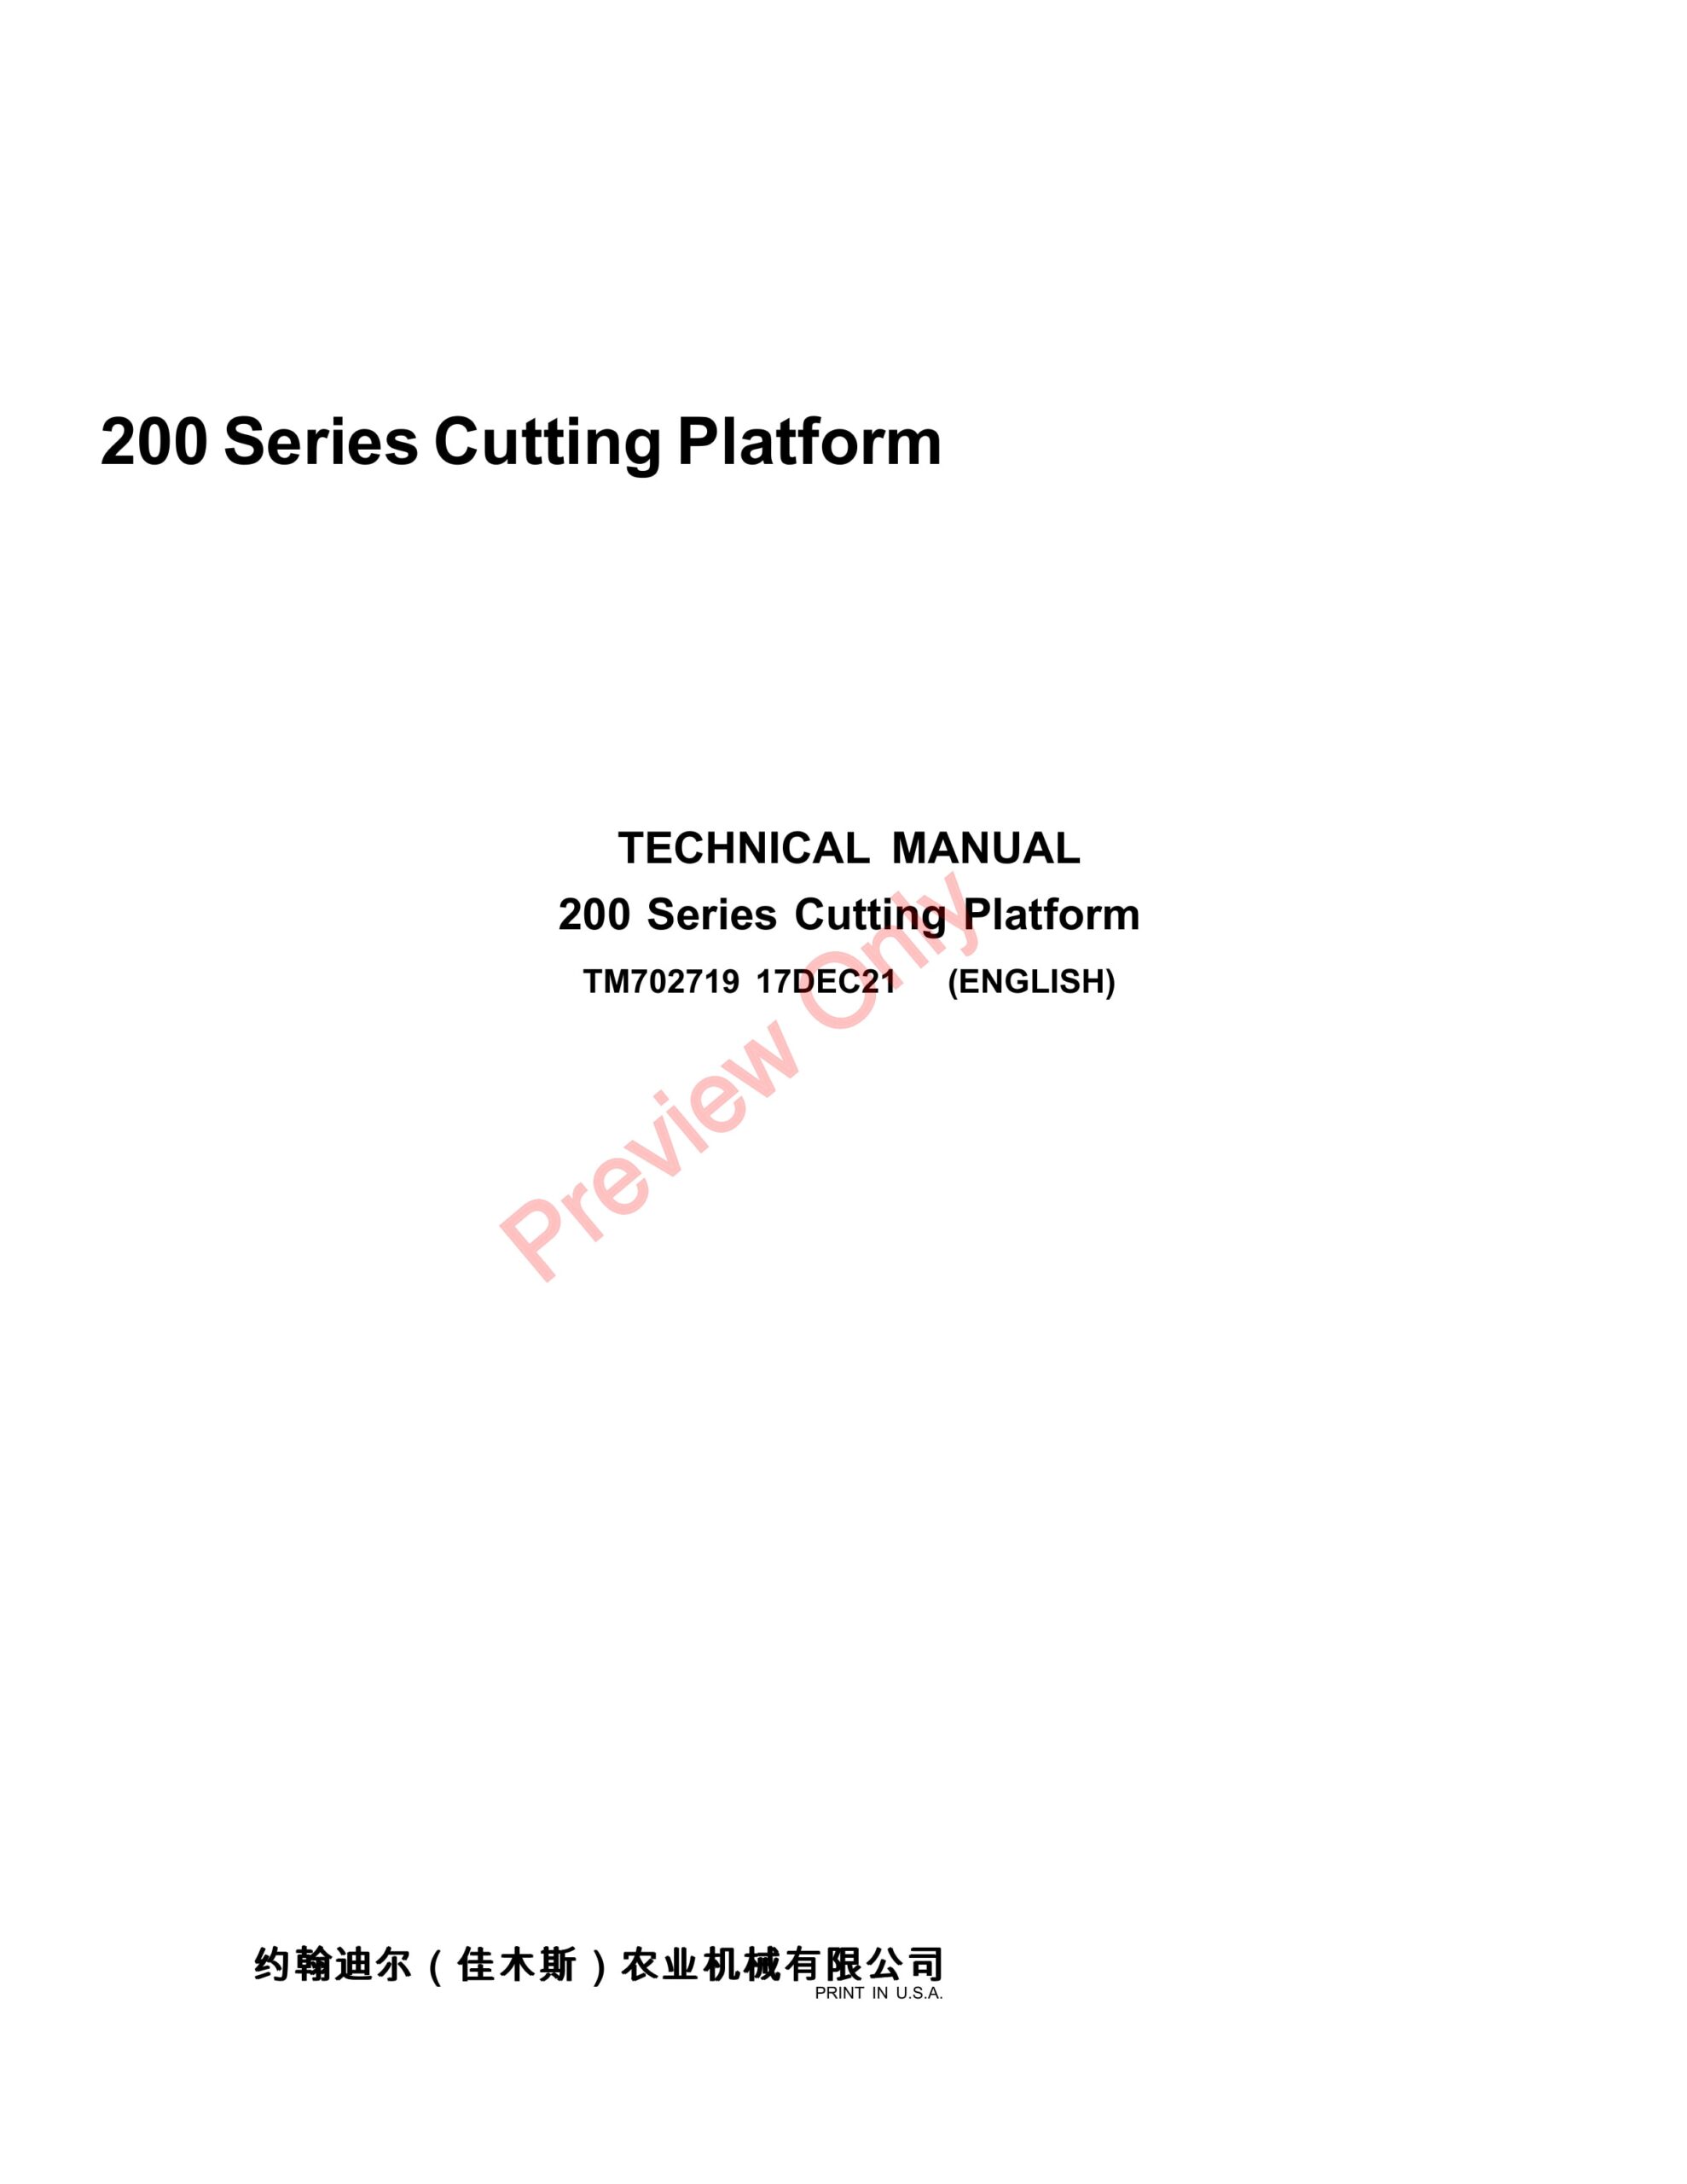 John Deere 200 Series Cutting Platform Technical Manual TM702719 17DEC21-1